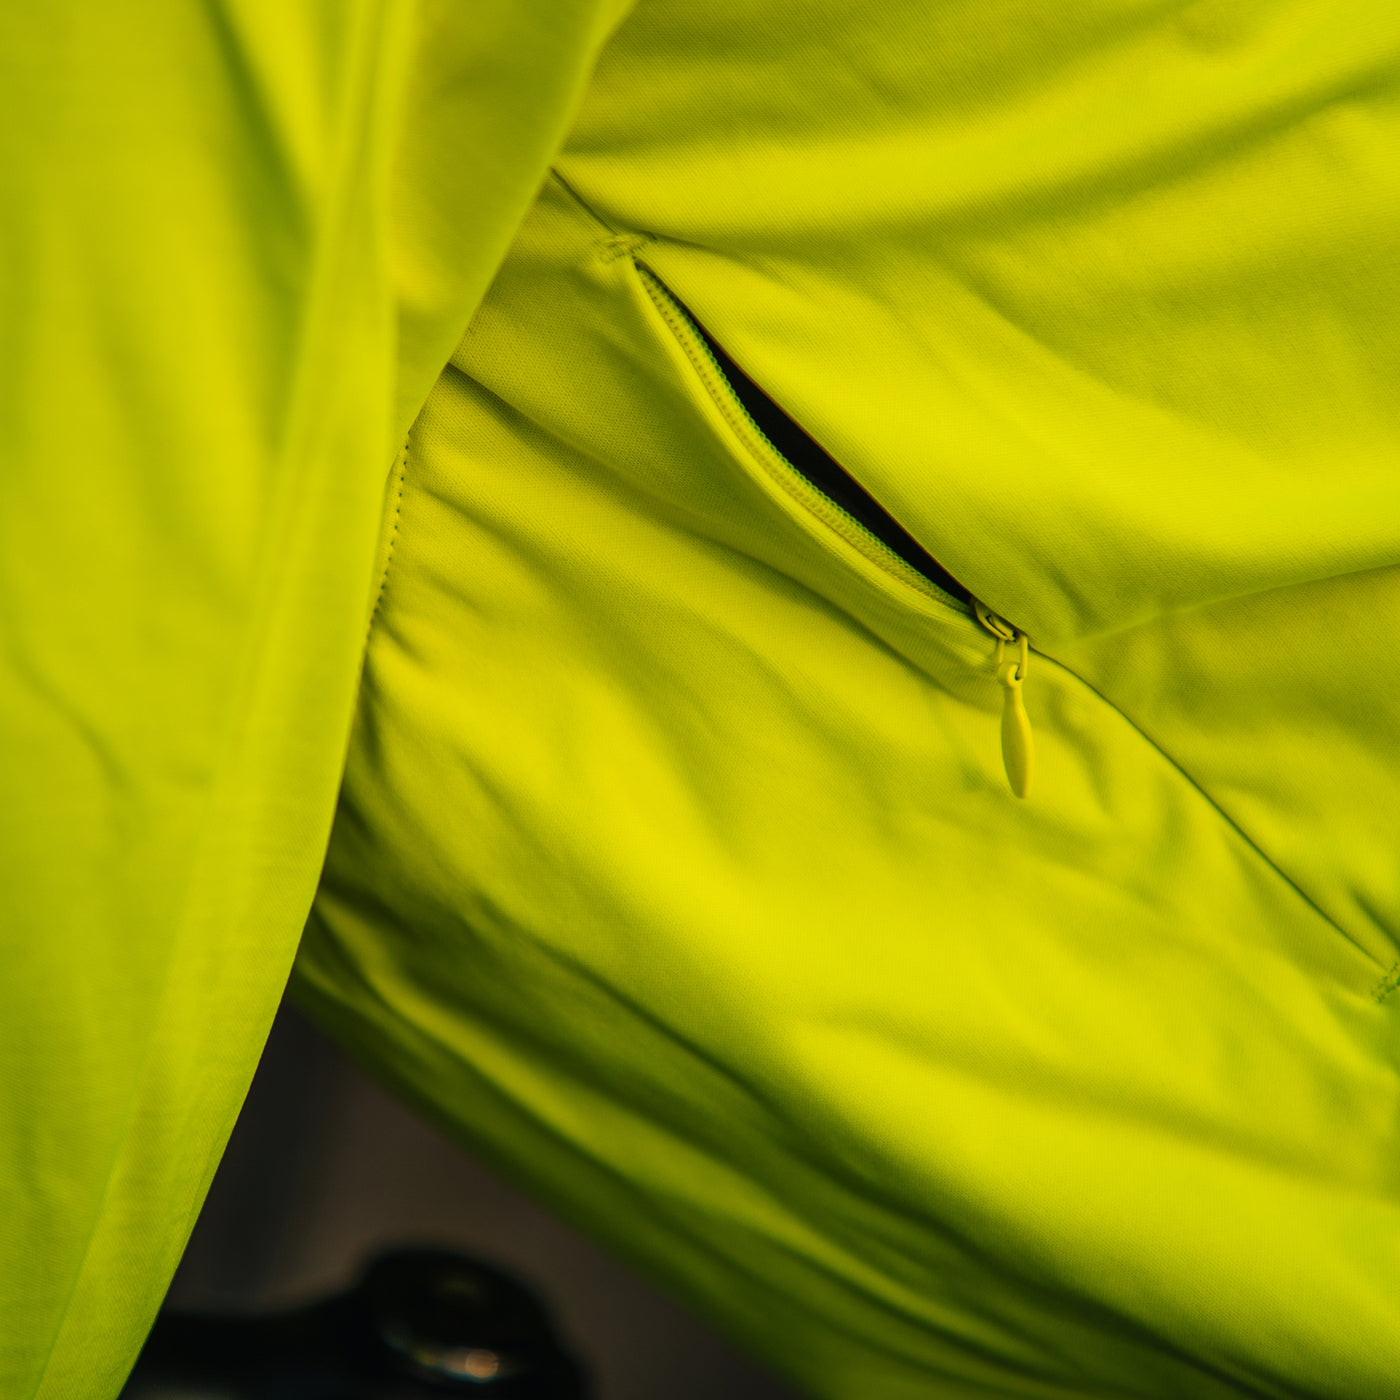 Sigr Gotlandsleden Tour - Hi-viz Yellow Soft Shell Merino Cycling Jacket for Men